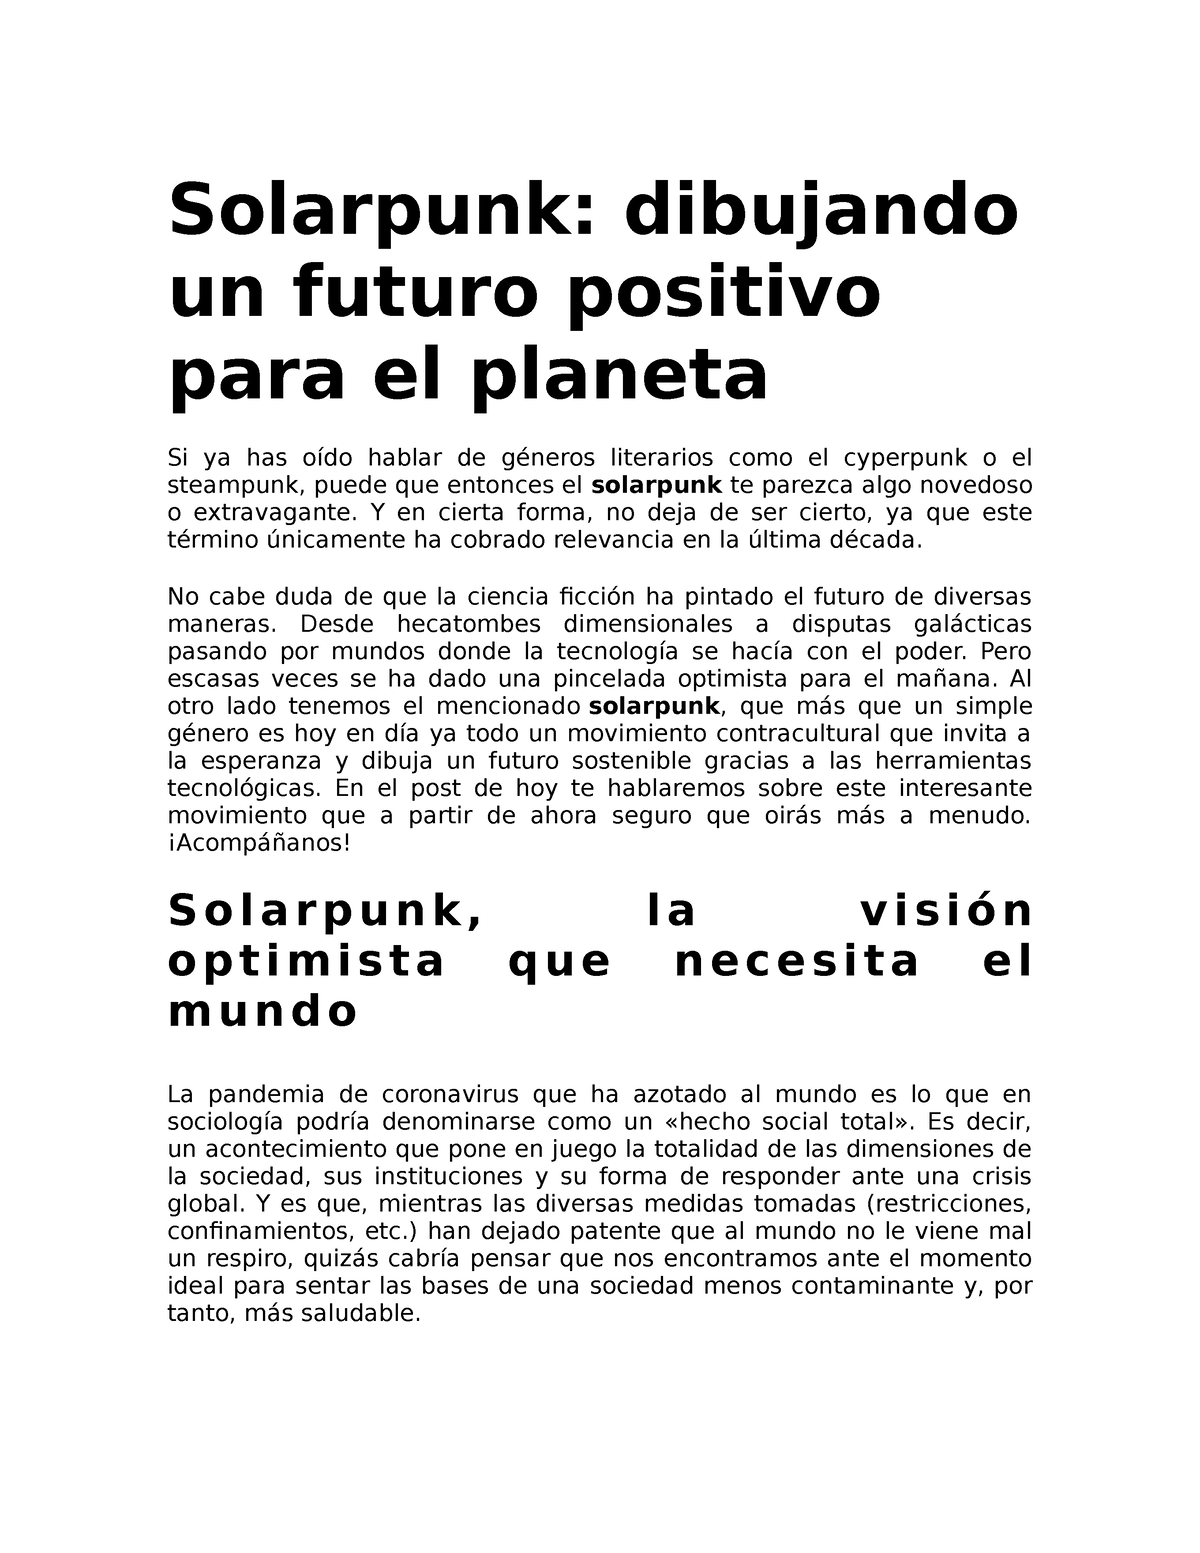 Solarpunk: dibujando un futuro positivo para el planeta 